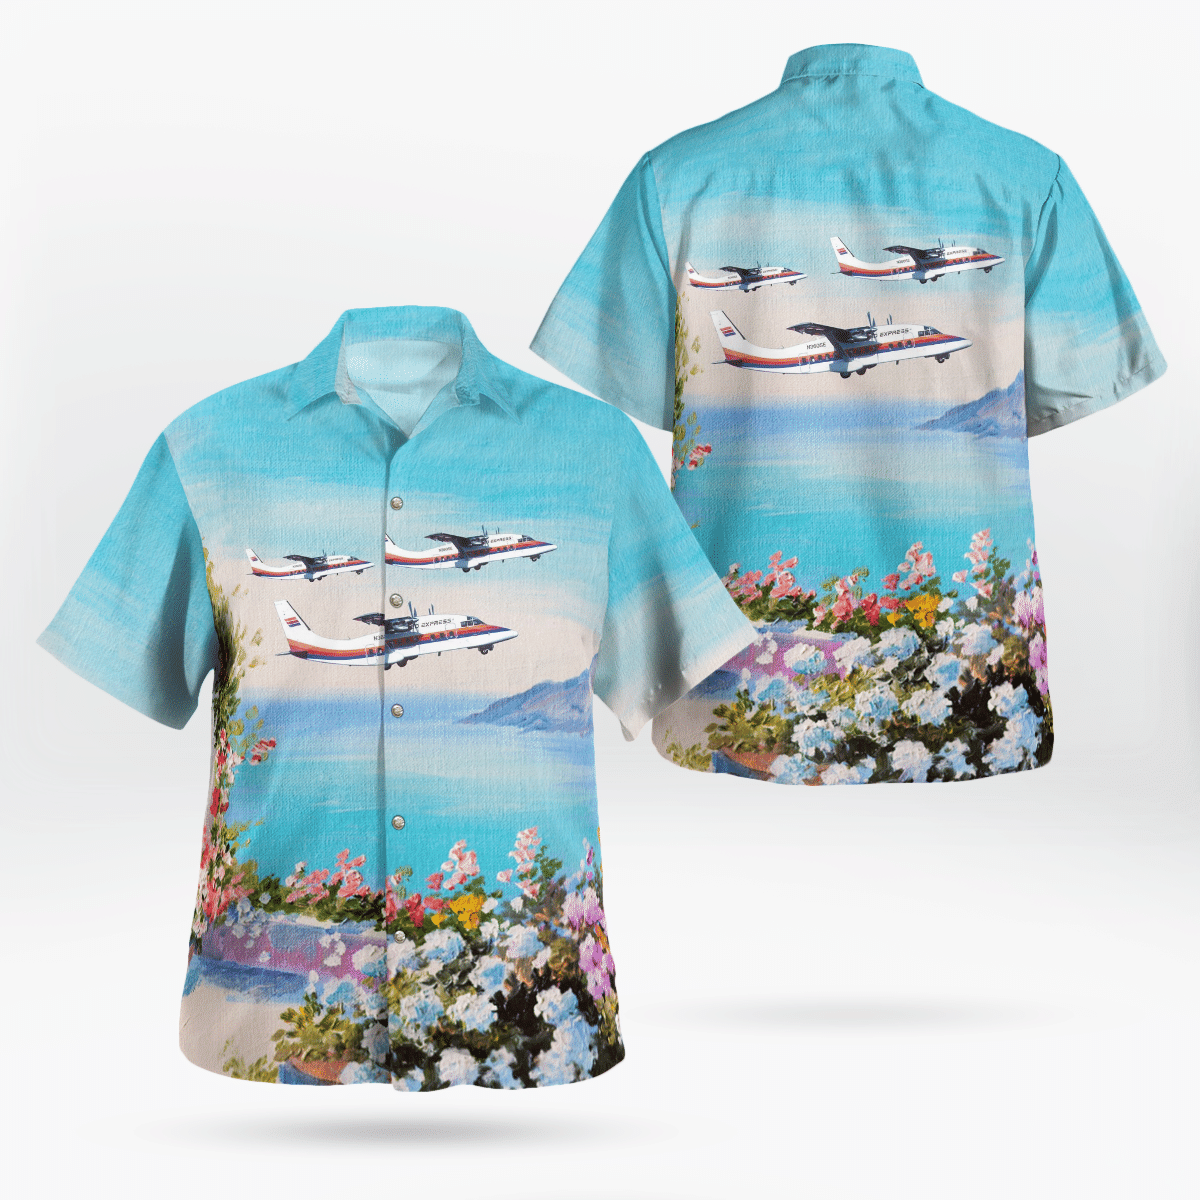 Get a new Hawaiian shirt to enjoy summer vacation 256